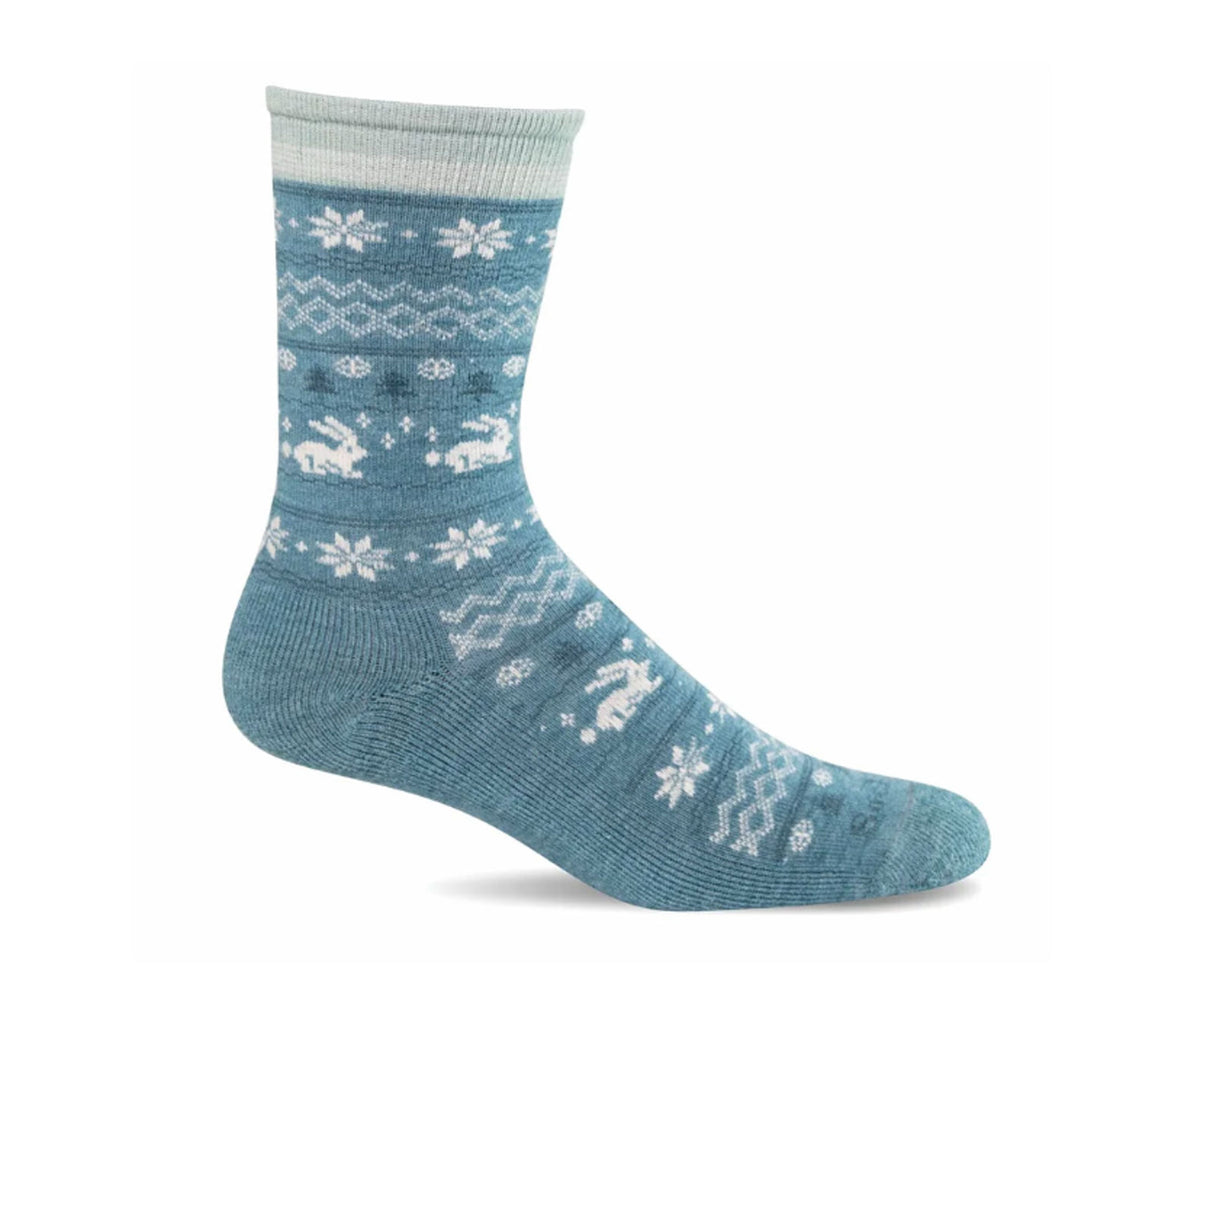 Sockwell Folksy Fairisle Crew Sock (Women) - Mineral Accessories - Socks - Lifestyle - The Heel Shoe Fitters